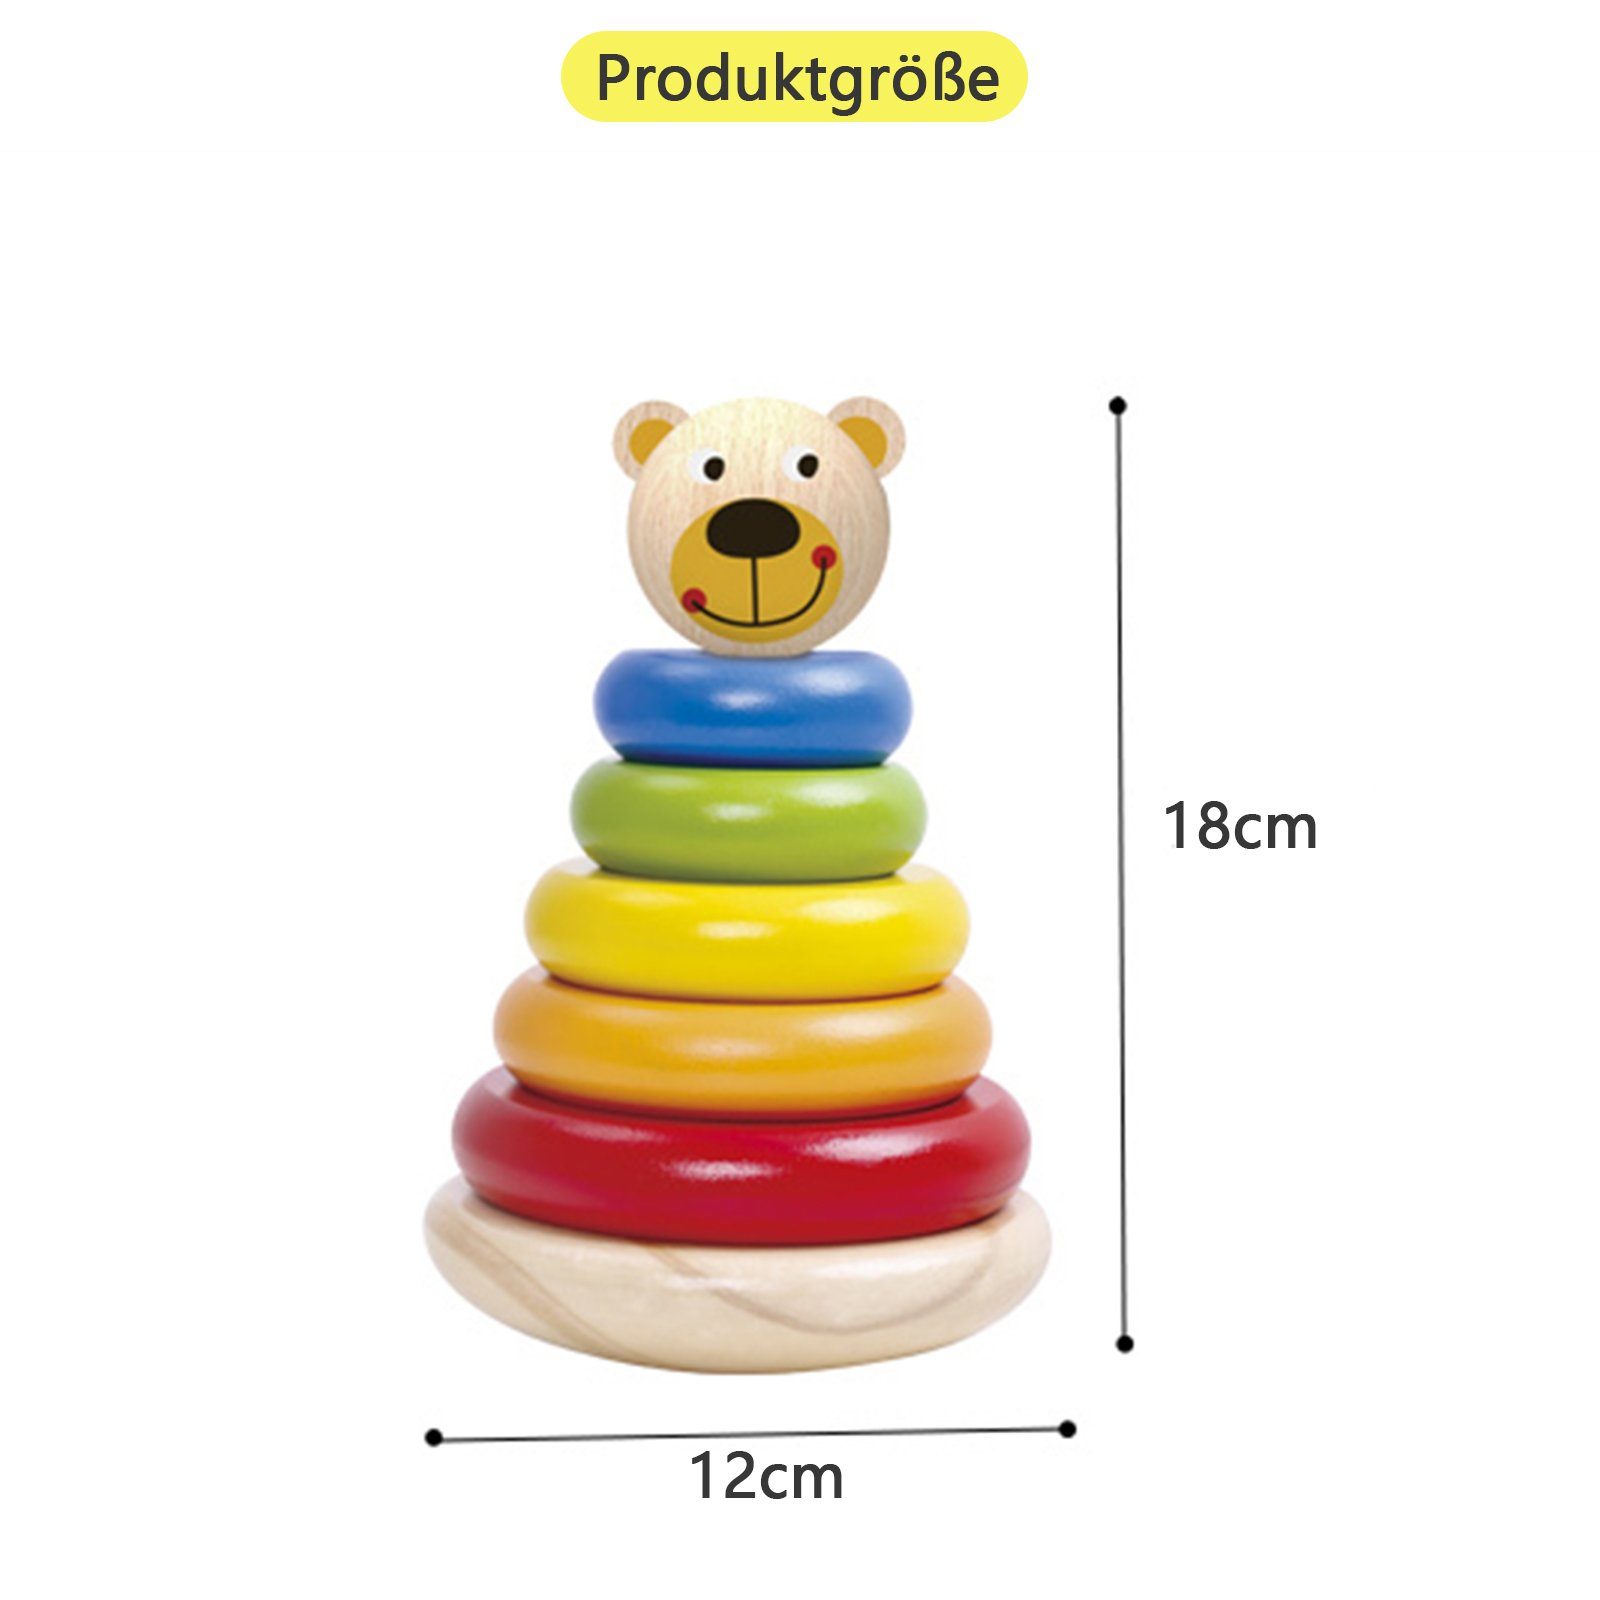 Tooky Toy Lernspielzeug Bär Wackelturm Holzspielzeug aus (Set, Regenbogen-Stapelbausteine), Holz Stapelspielzeug Balancierspiel